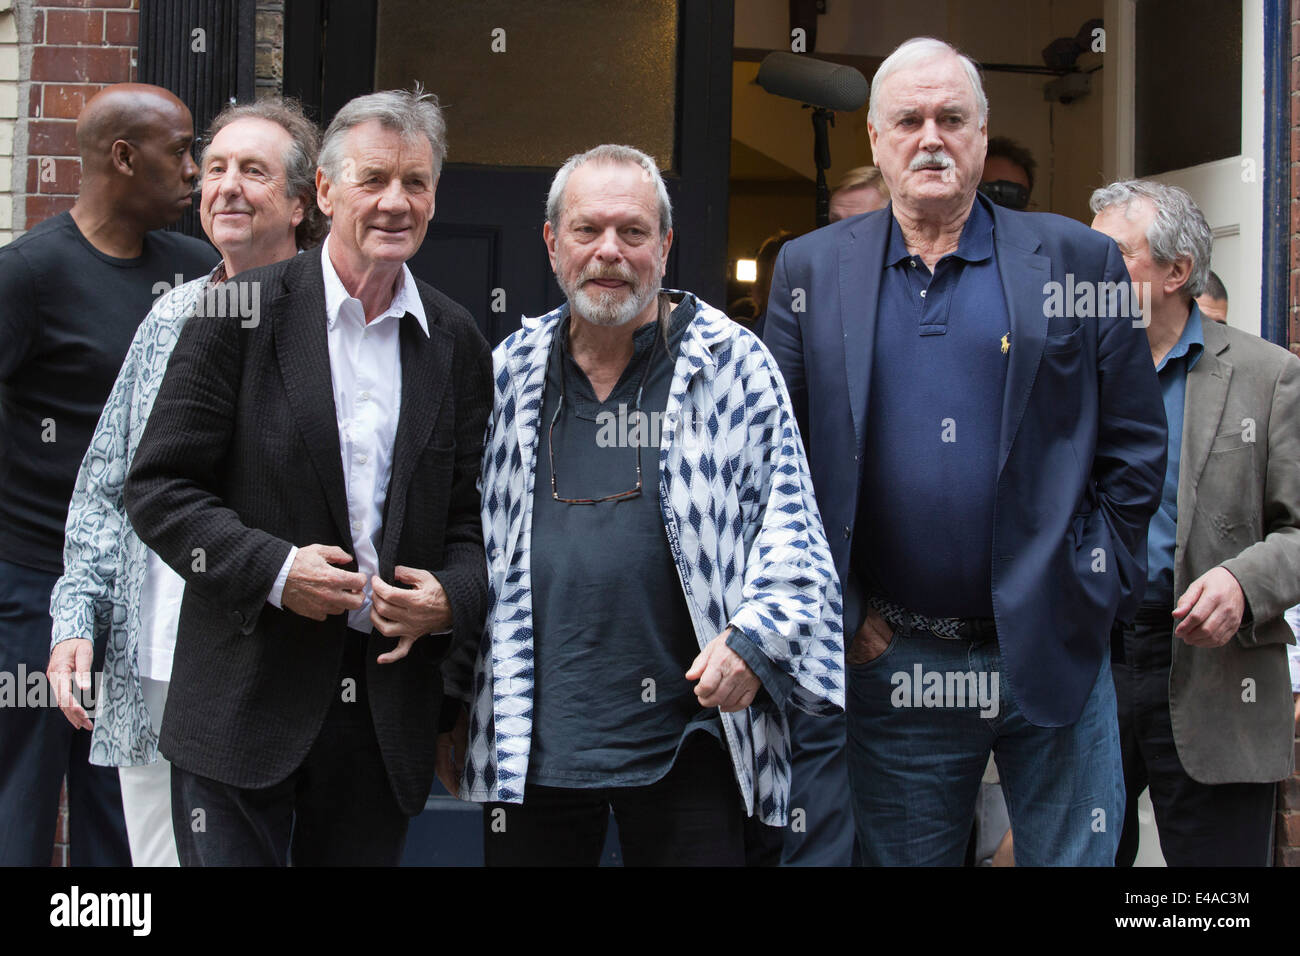 Monty Python photocall with Eric Idle, Michael Palin, Terry Gilliam, John Cleese and Terry Jones (hidden), London Palladium. Stock Photo